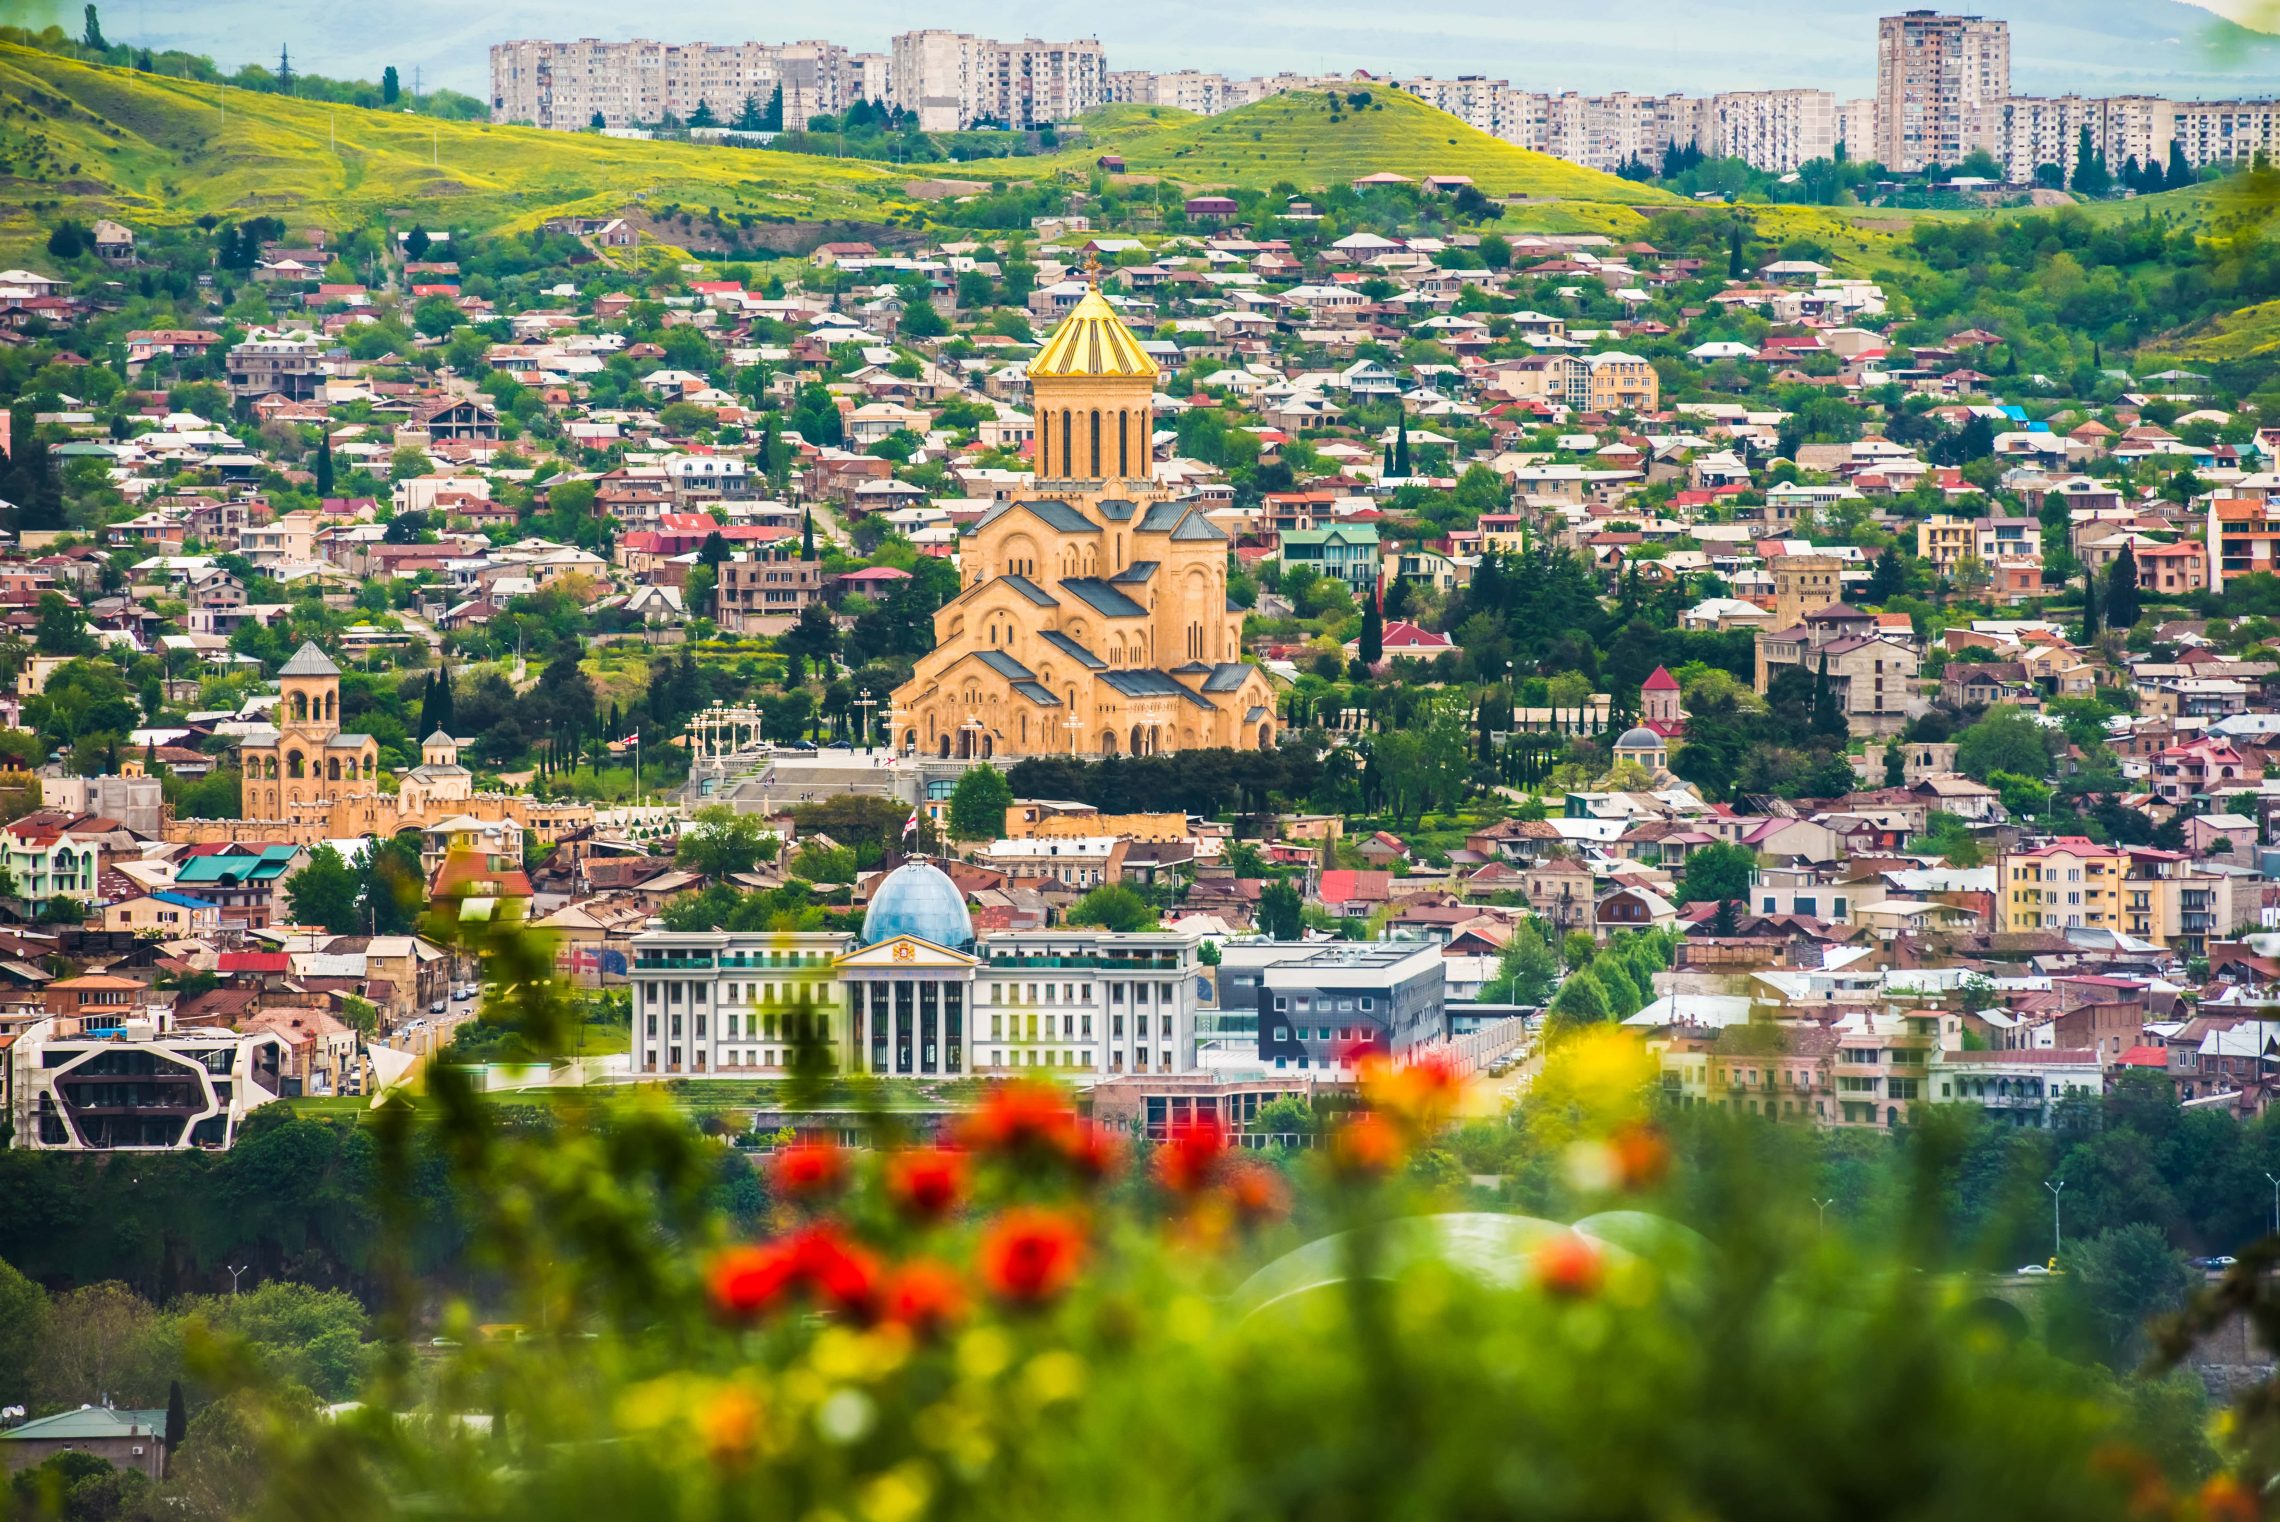 Tbilisi city. Столица Грузии Тифлис. Столица Грузии Тбилиси Самеба. Грузия столица Тбилиси достопримечательности. Грузия столица 2021.